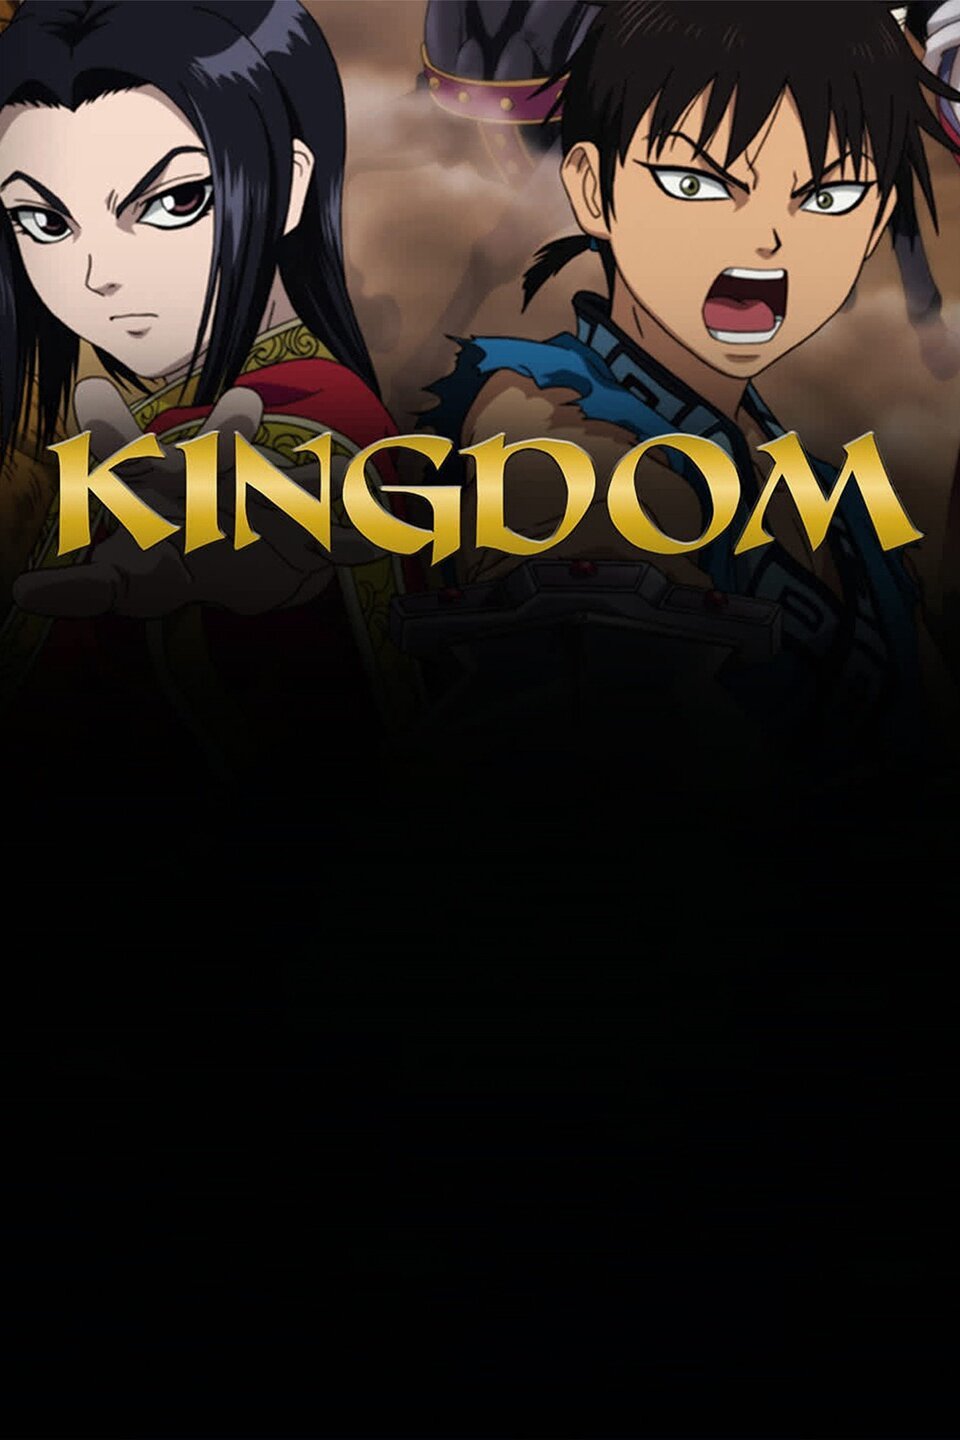 ANIME NEWS: 'Kingdom' anime season 3 to start airing on NHK from April |  The Asahi Shimbun: Breaking News, Japan News and Analysis